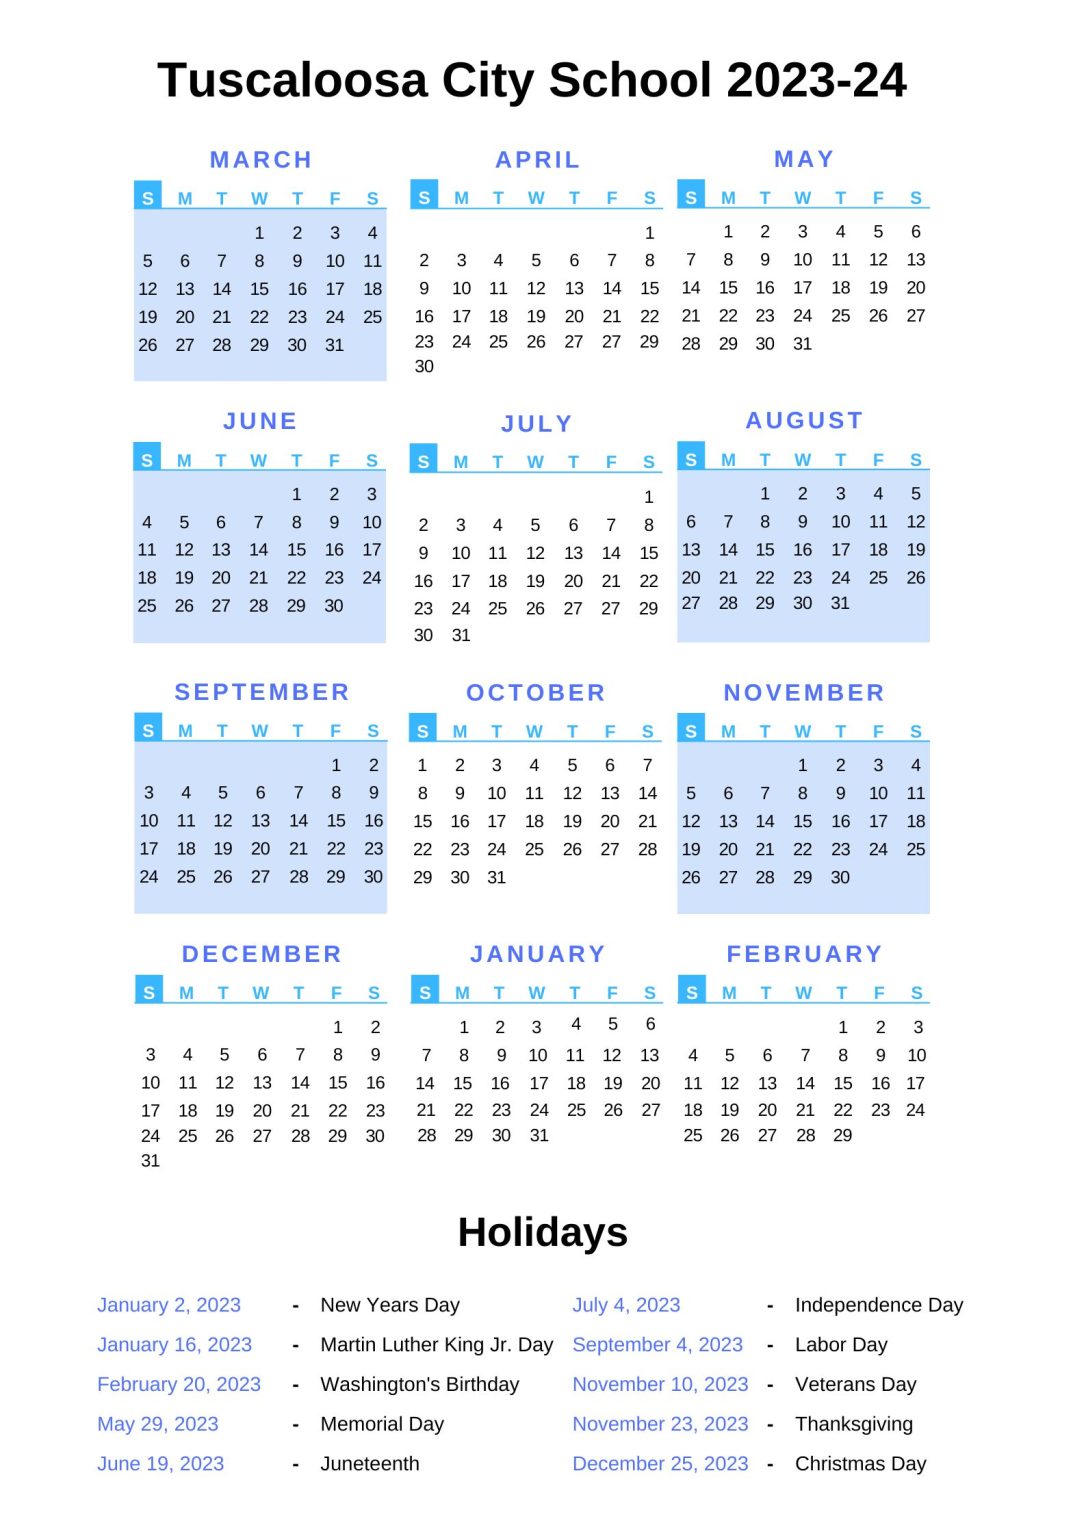 Tuscaloosa City Schools Calendar 202324 With Holidays